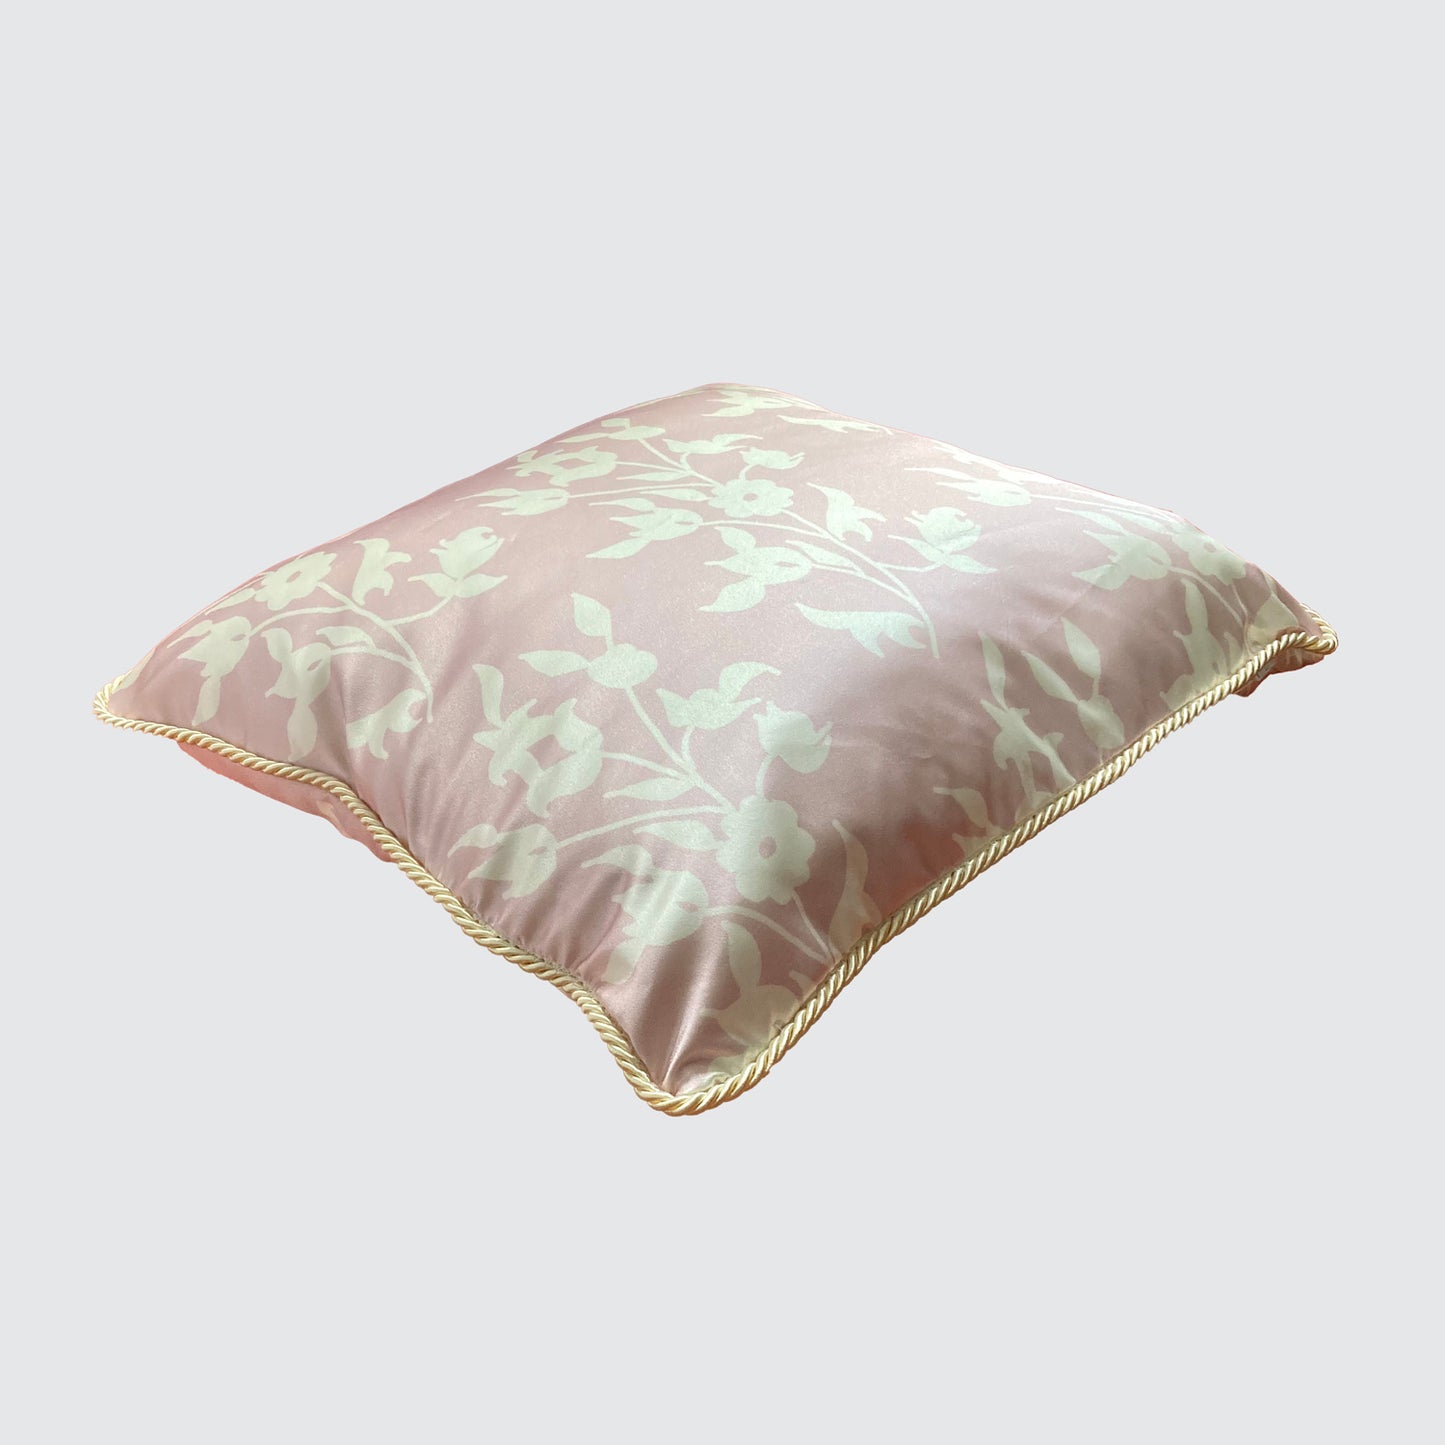 Silk Cushion - Pink With White Foliage